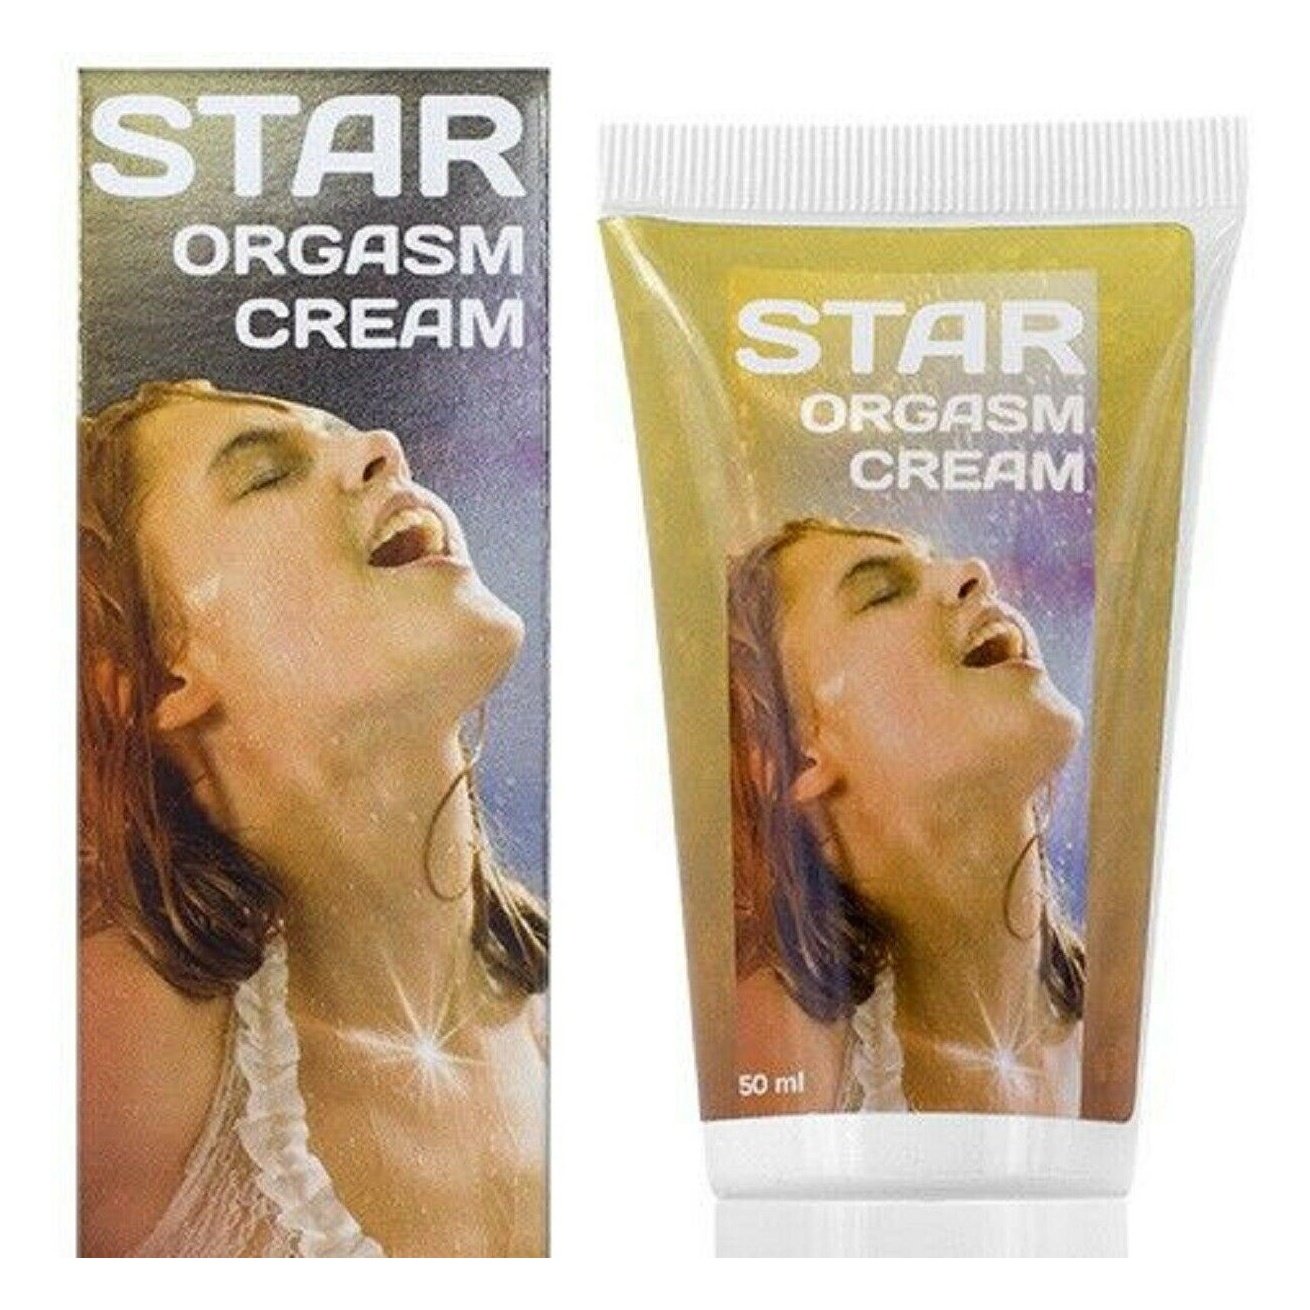 Star Orgasm Cream Female Enhancer Climax Eccitazione Intensifica 1.7fl oz 50ml 